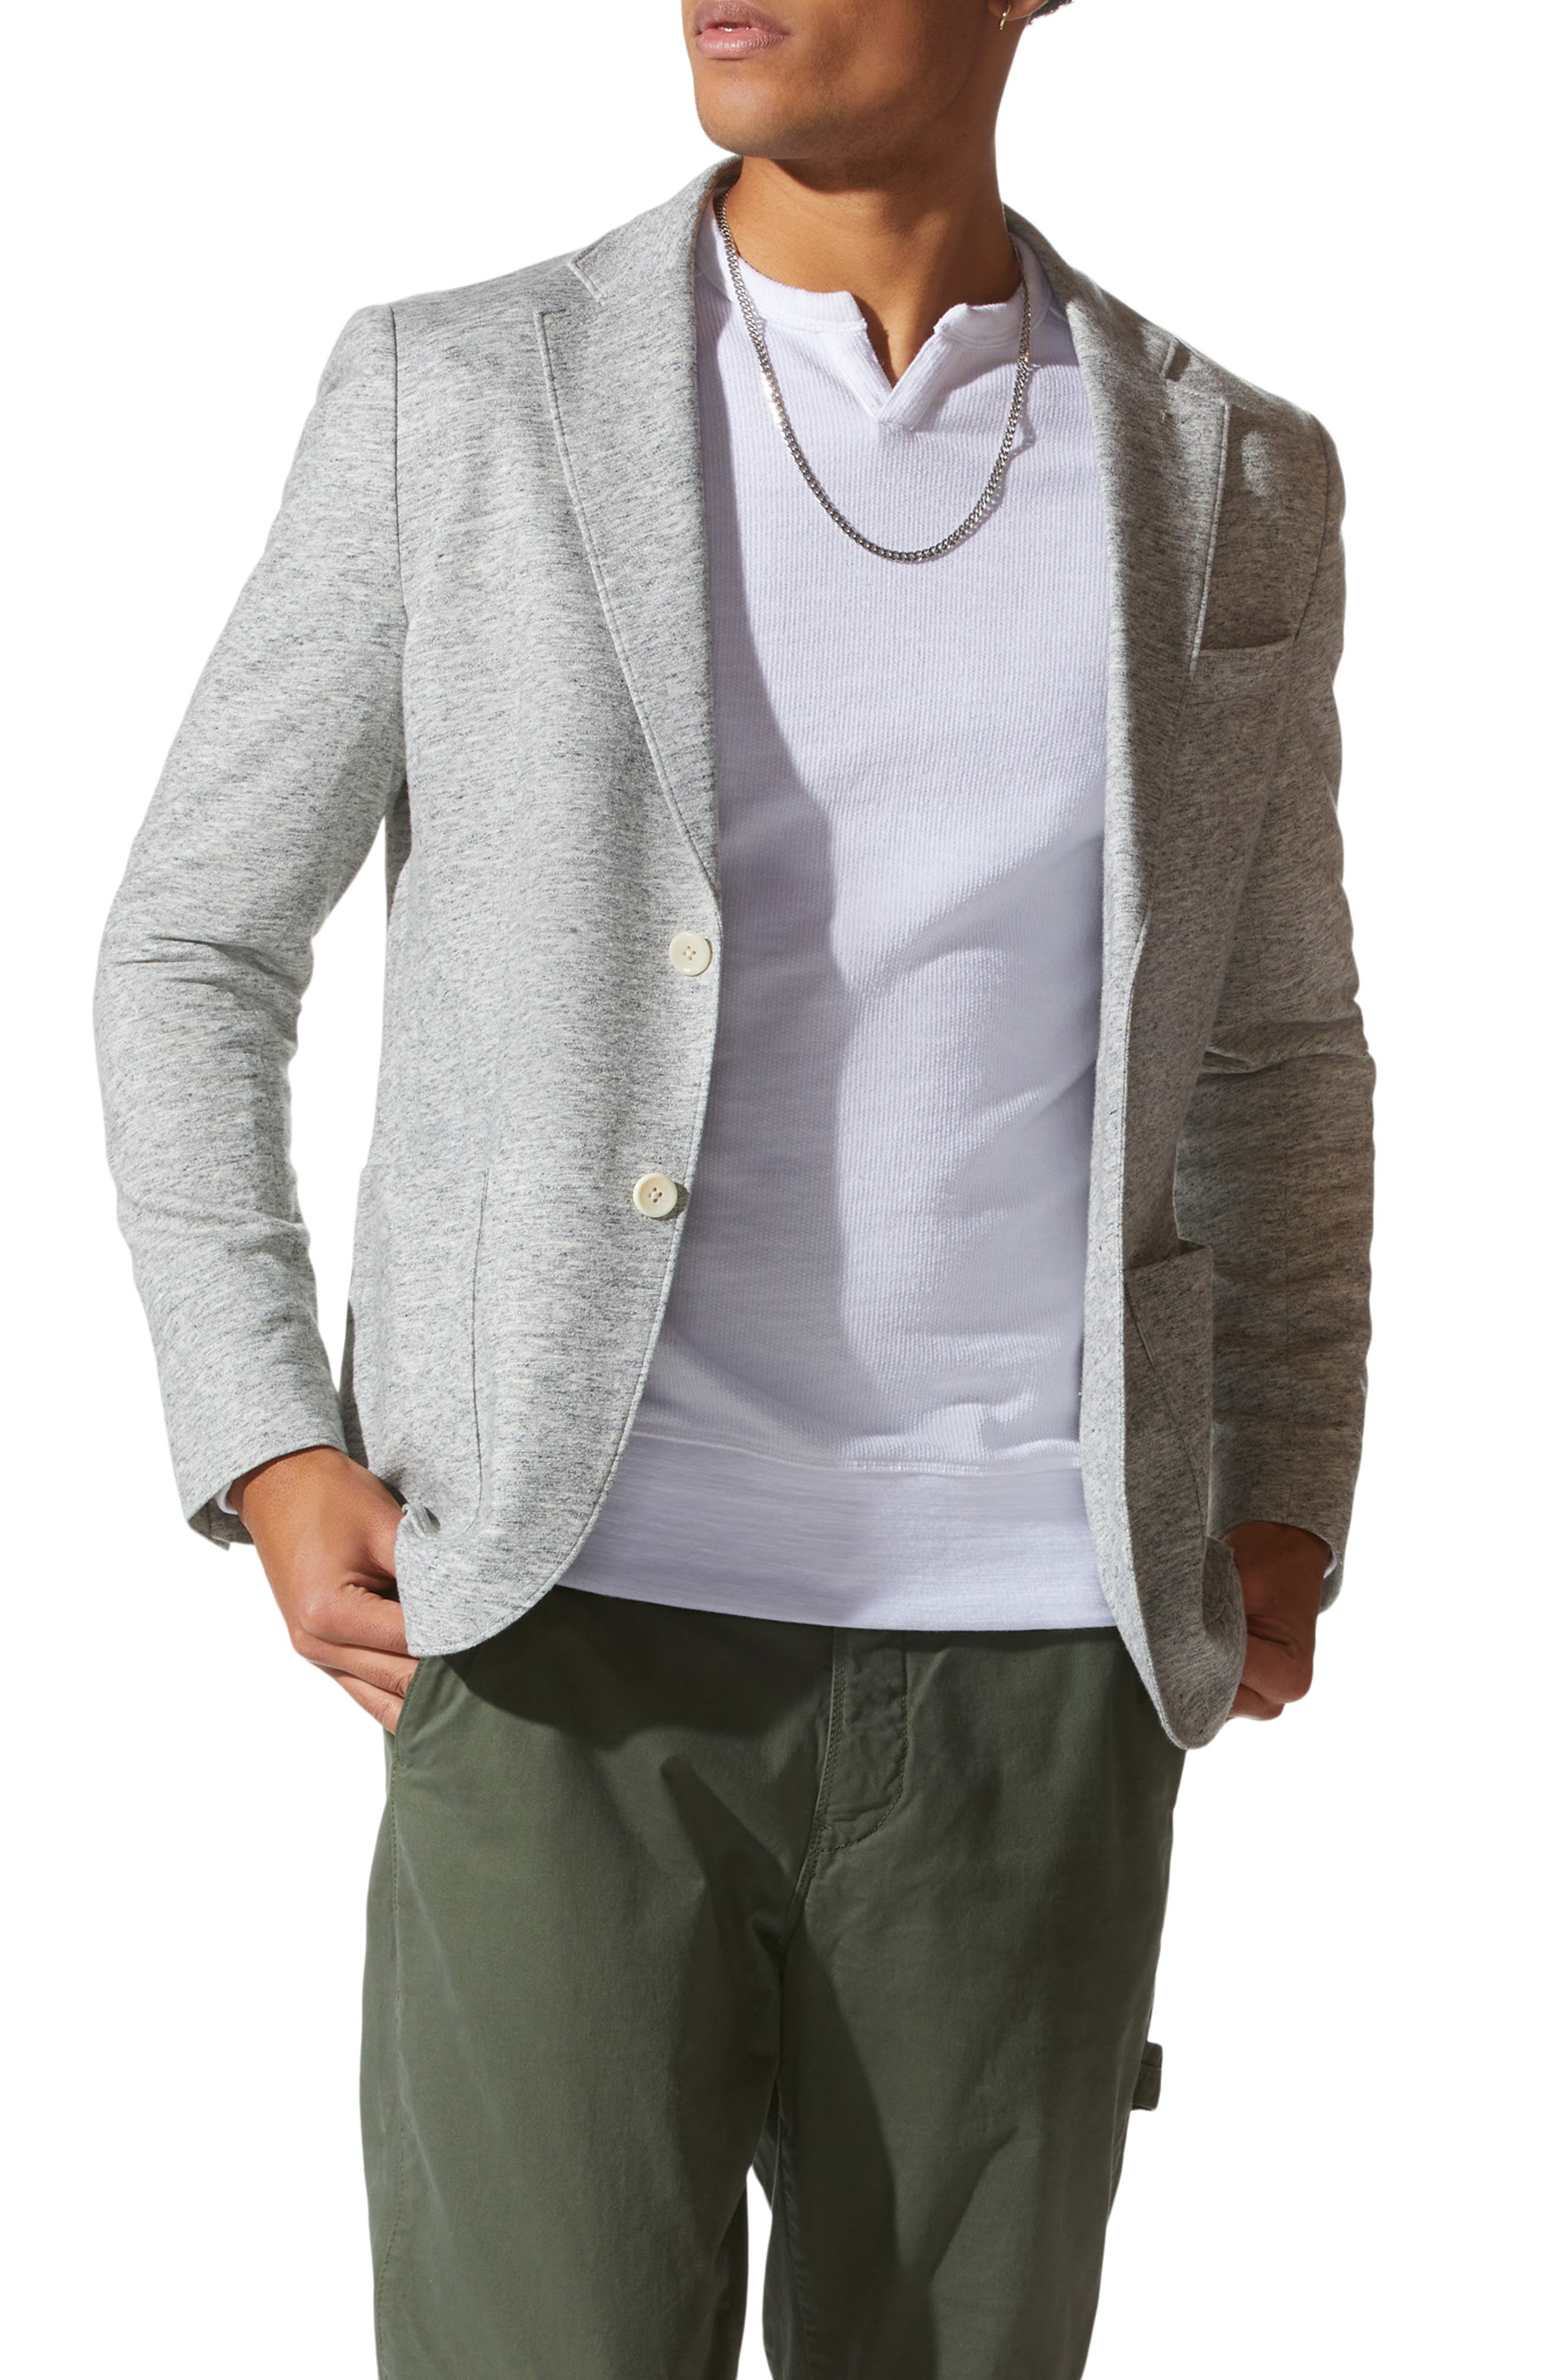 Men's Slim collar jackets fashion jacket Tops Casual coat outerwear XS-XL